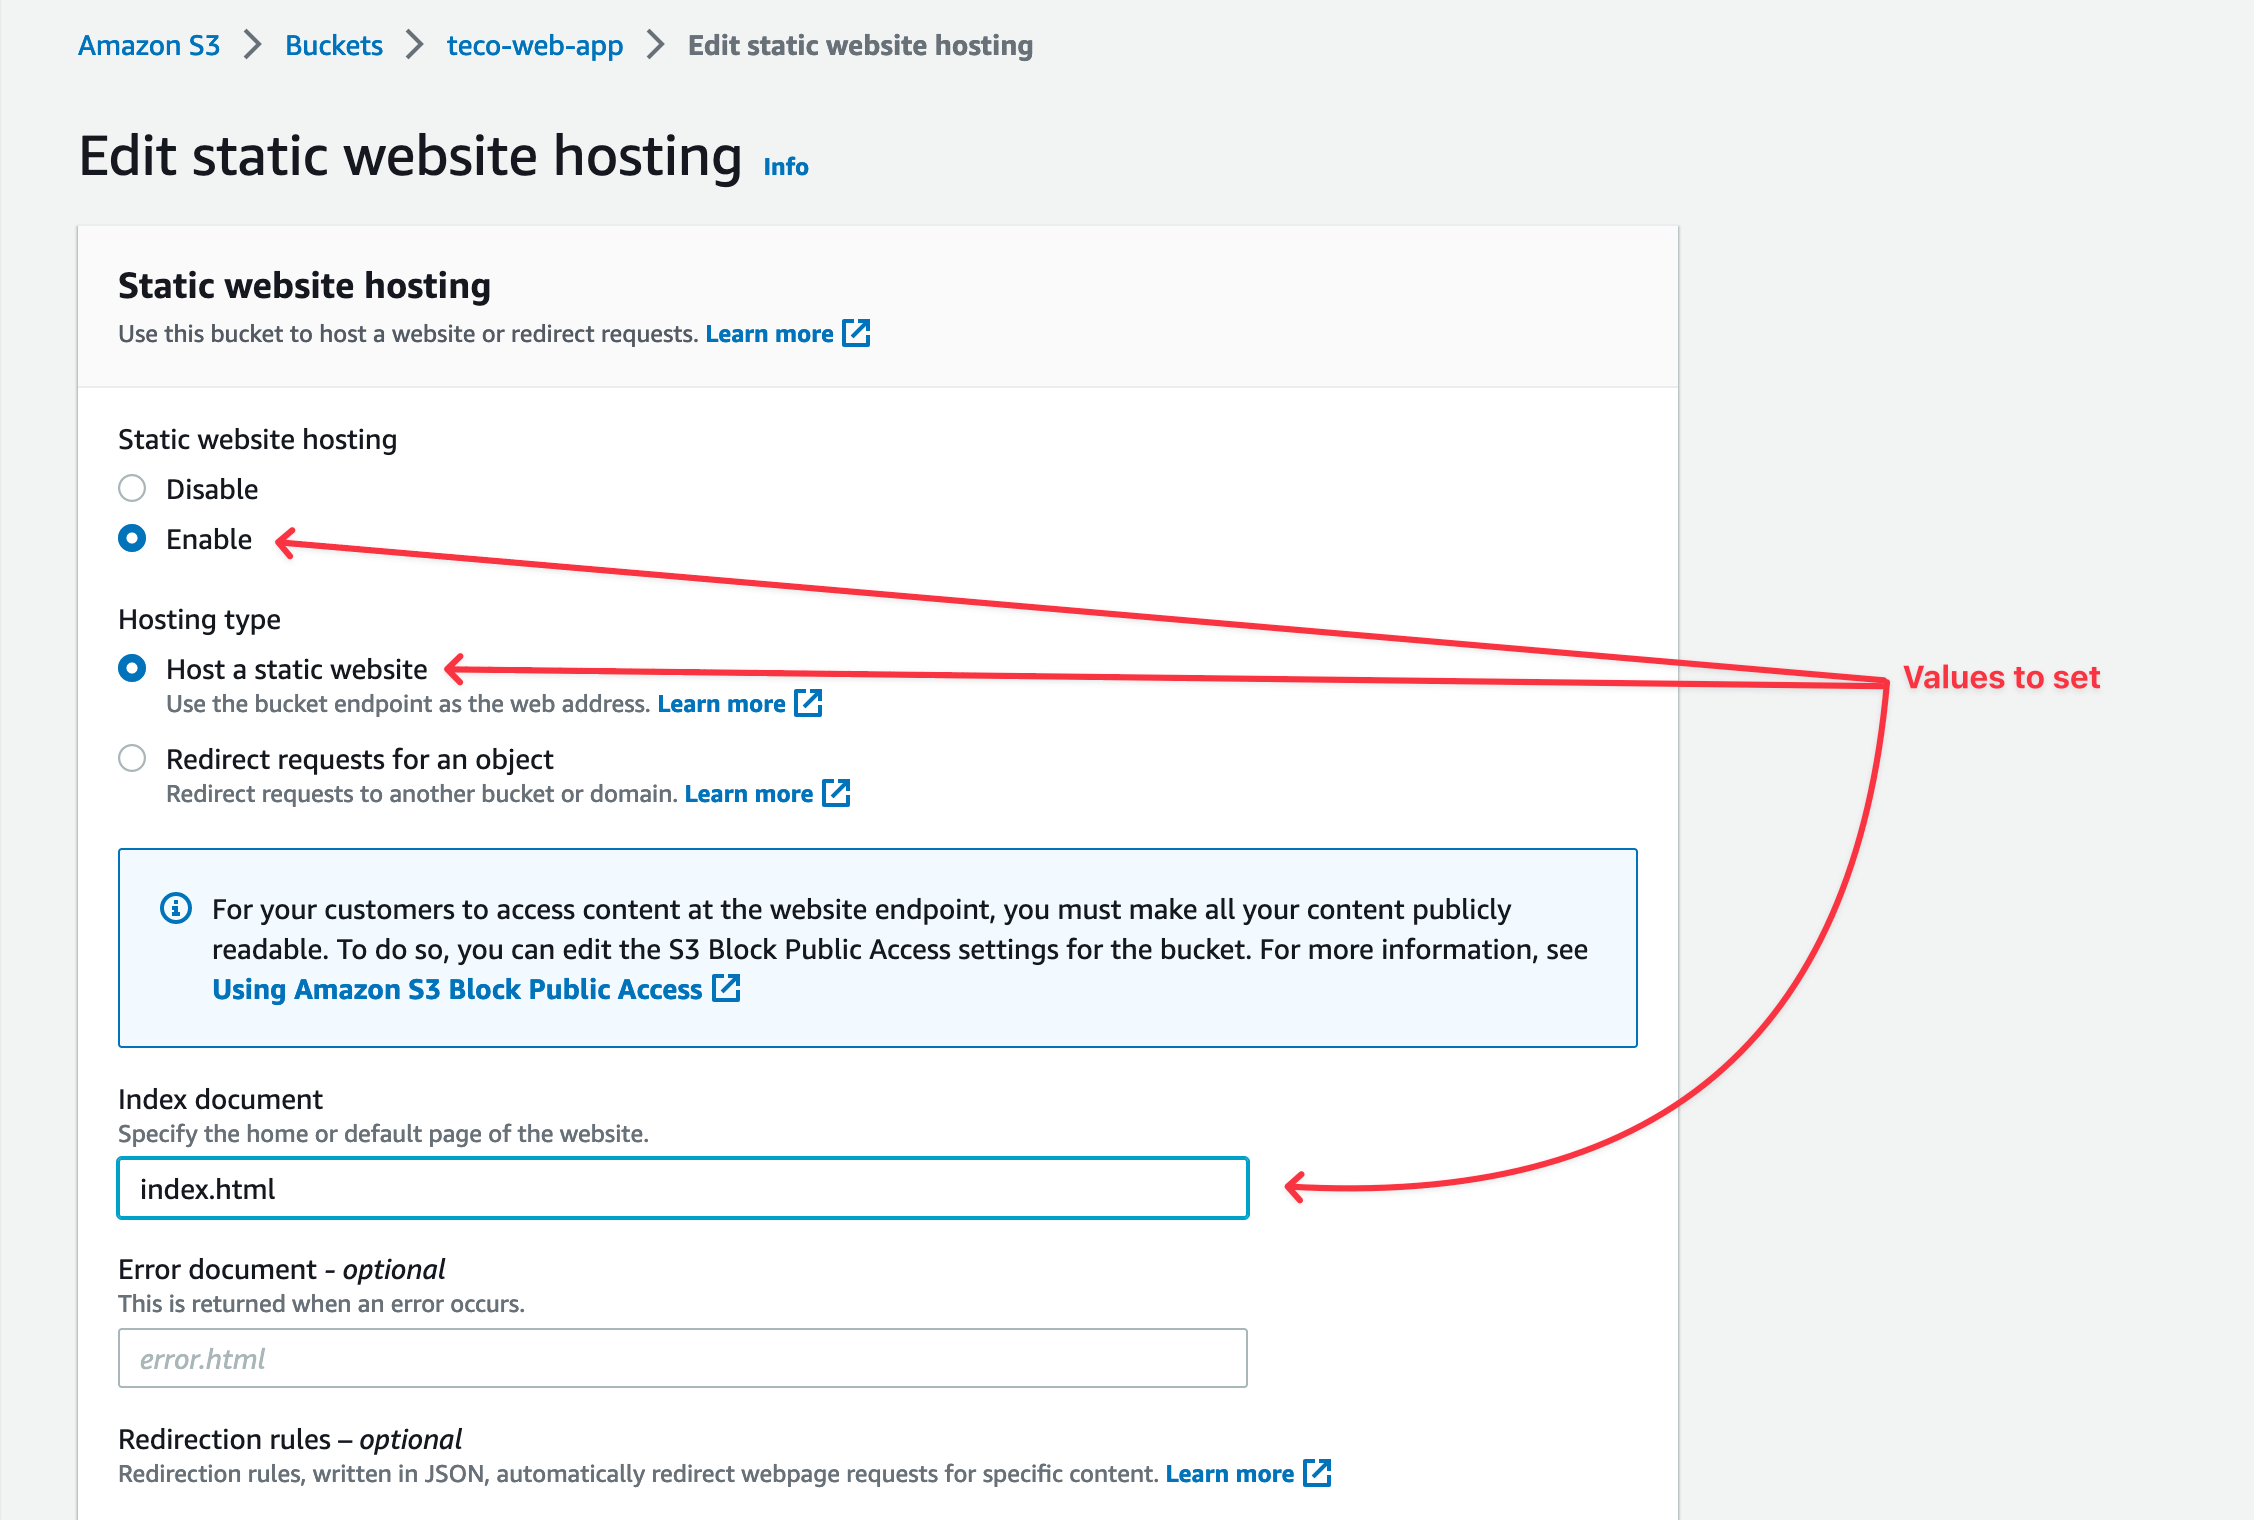 New values for the static website hosting settings.